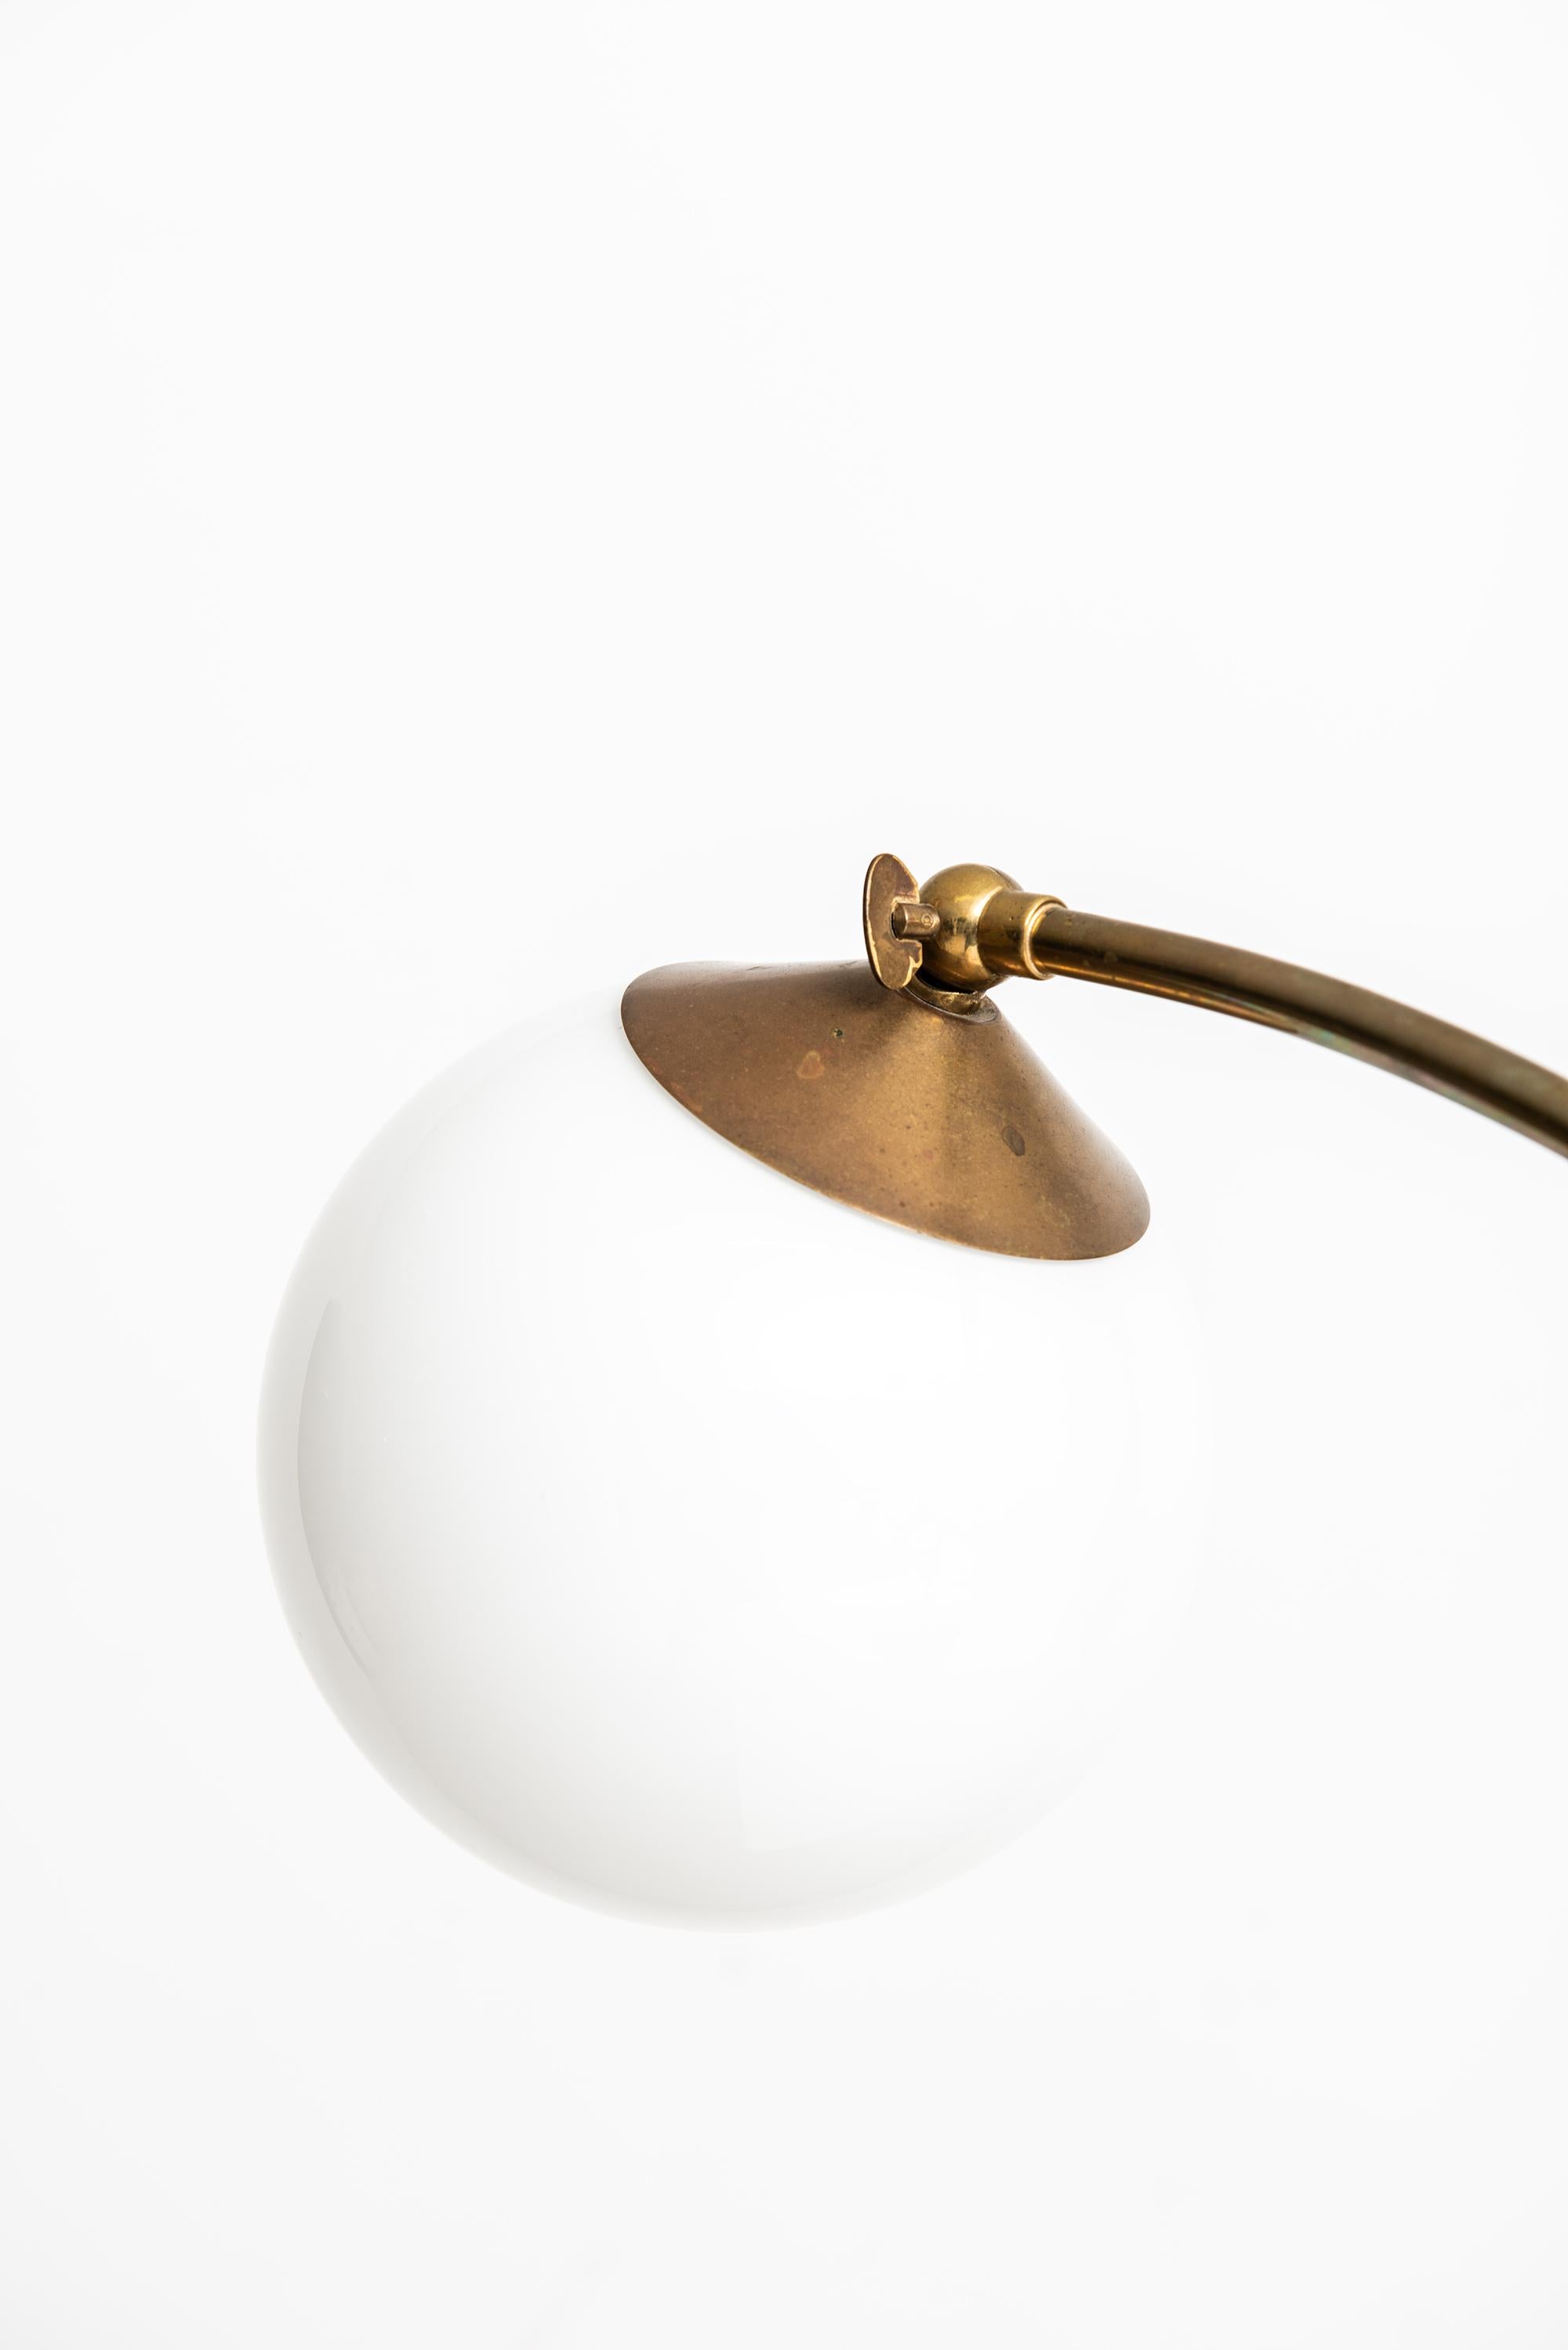 Scandinavian Modern Poul Dinesen Table Lamp Produced by Poul Dinesen in Denmark